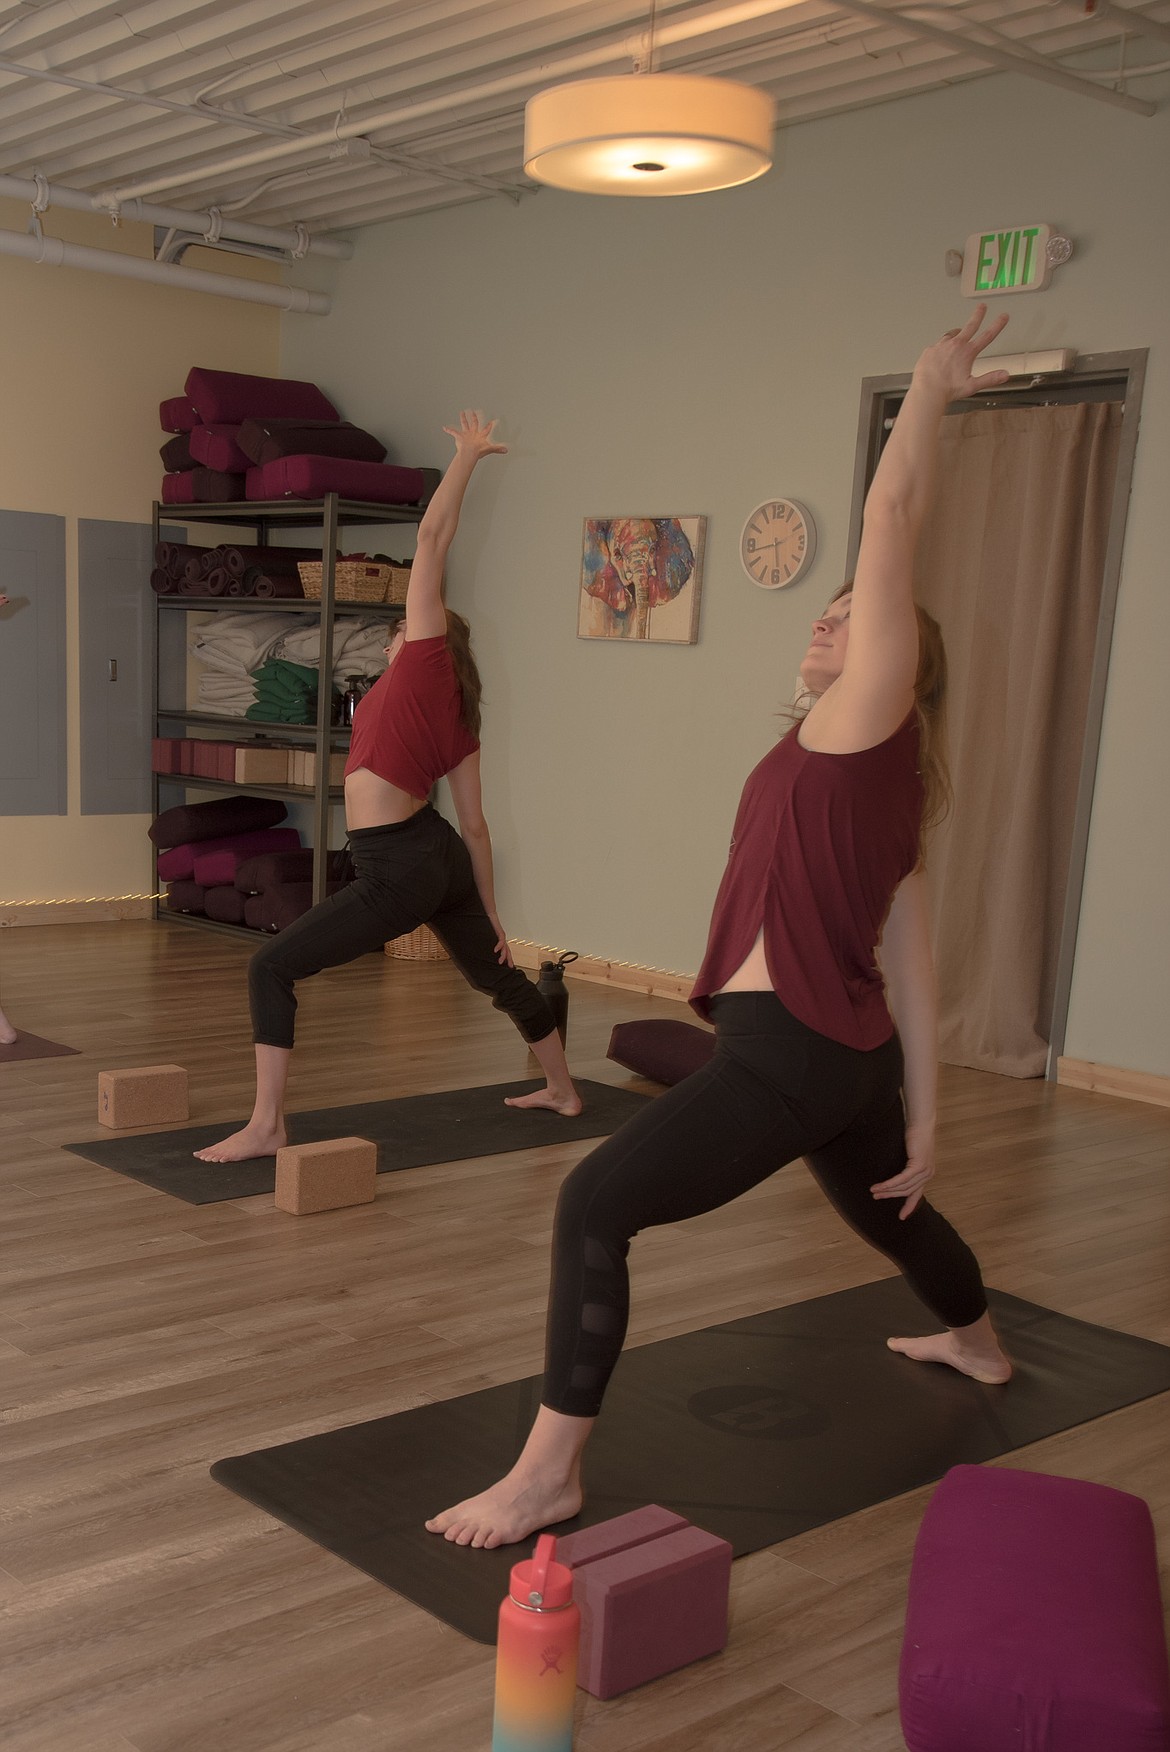 Yoga teachers practice yoga at the Whitefish Yoga Hive studio (courtesy photos).